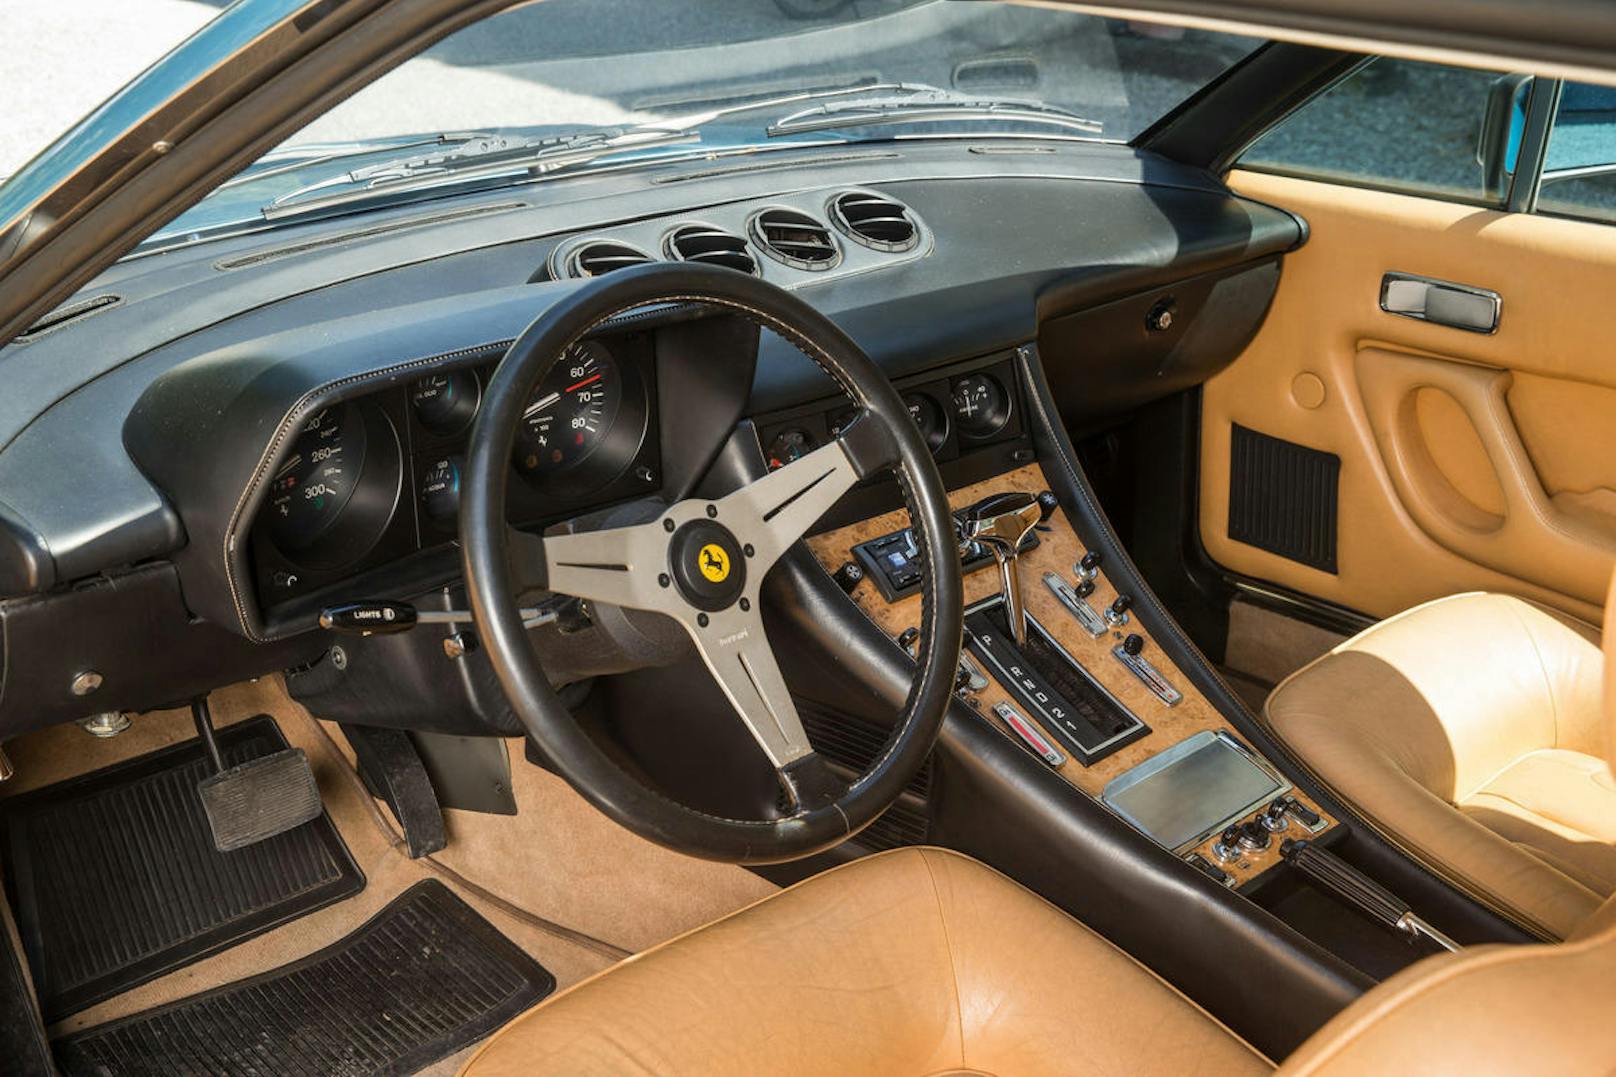 Luxuriöses Cockpit mit Leder und Holz.